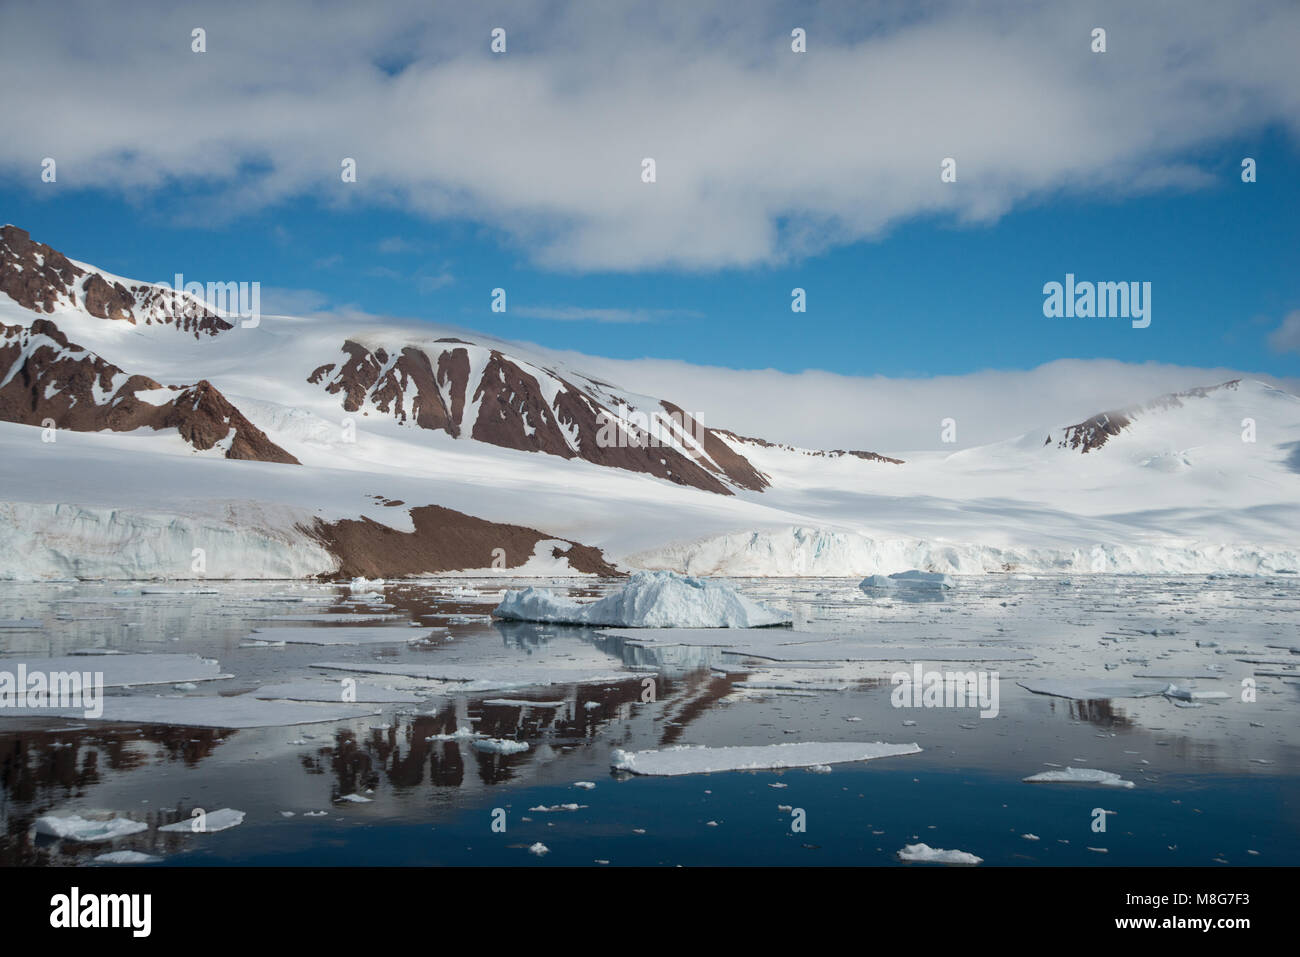 A beautiful frozen landscape scene in Antarctica Stock Photo